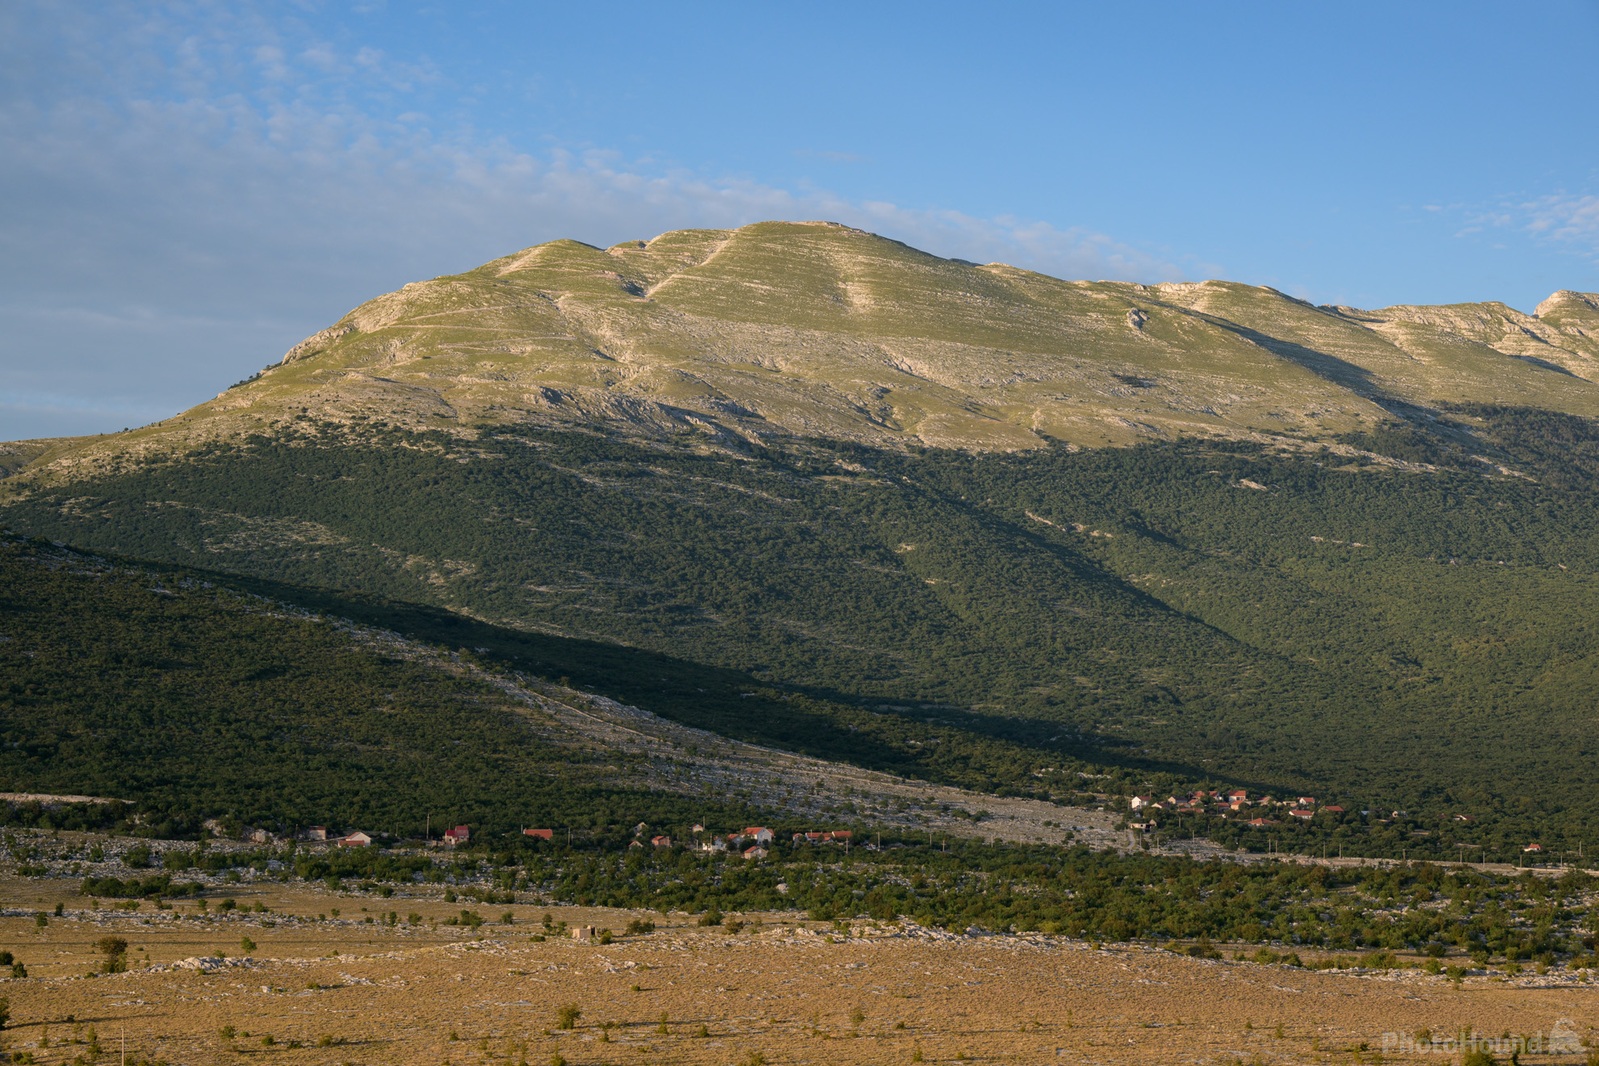 Image of Merdžan Fortress above Mostar by Luka Esenko